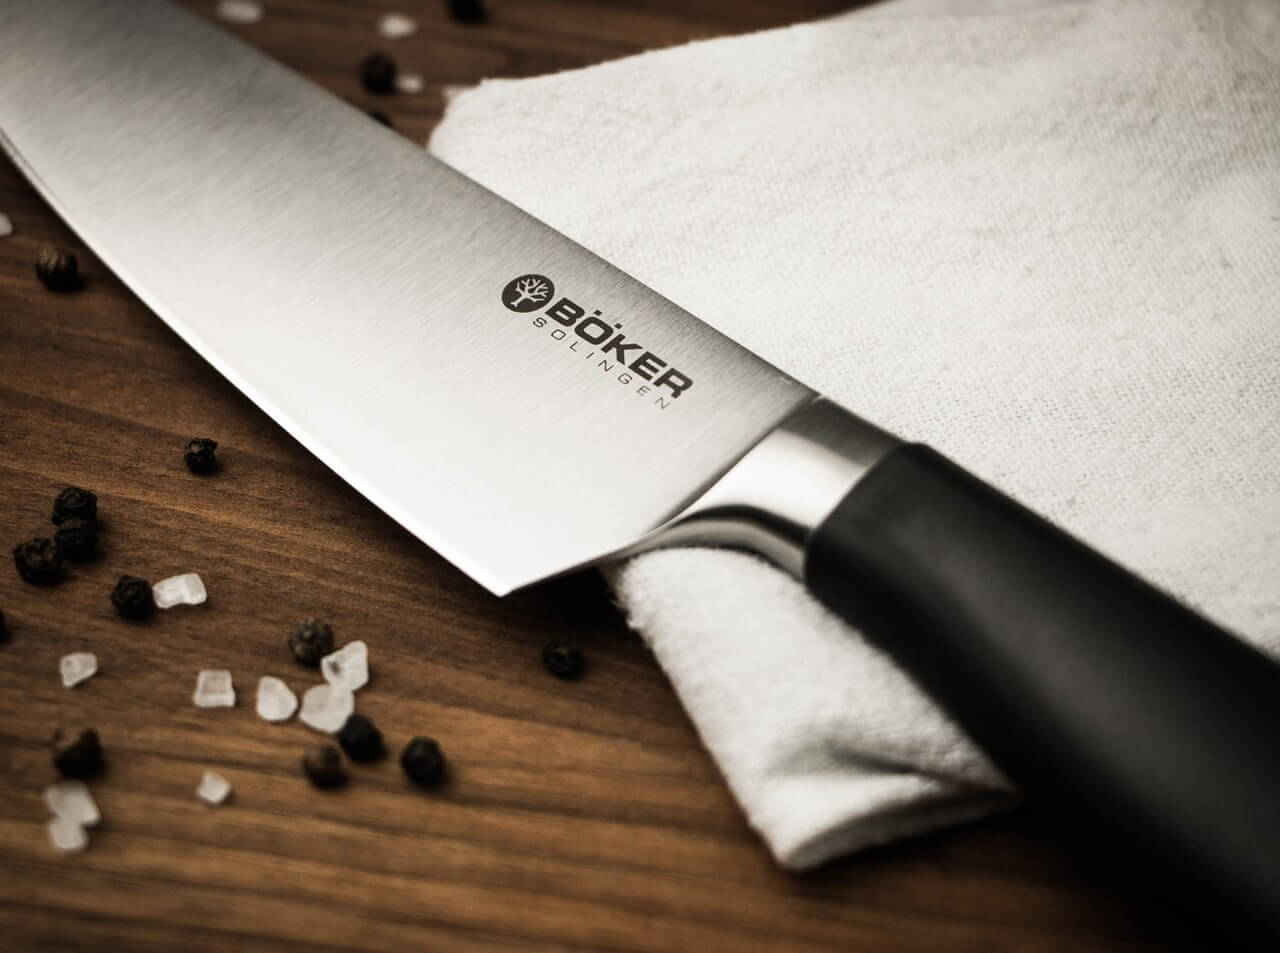 Boker Core Small Chef's Knife 6.38 inch Blade, Walnut Wood Handle